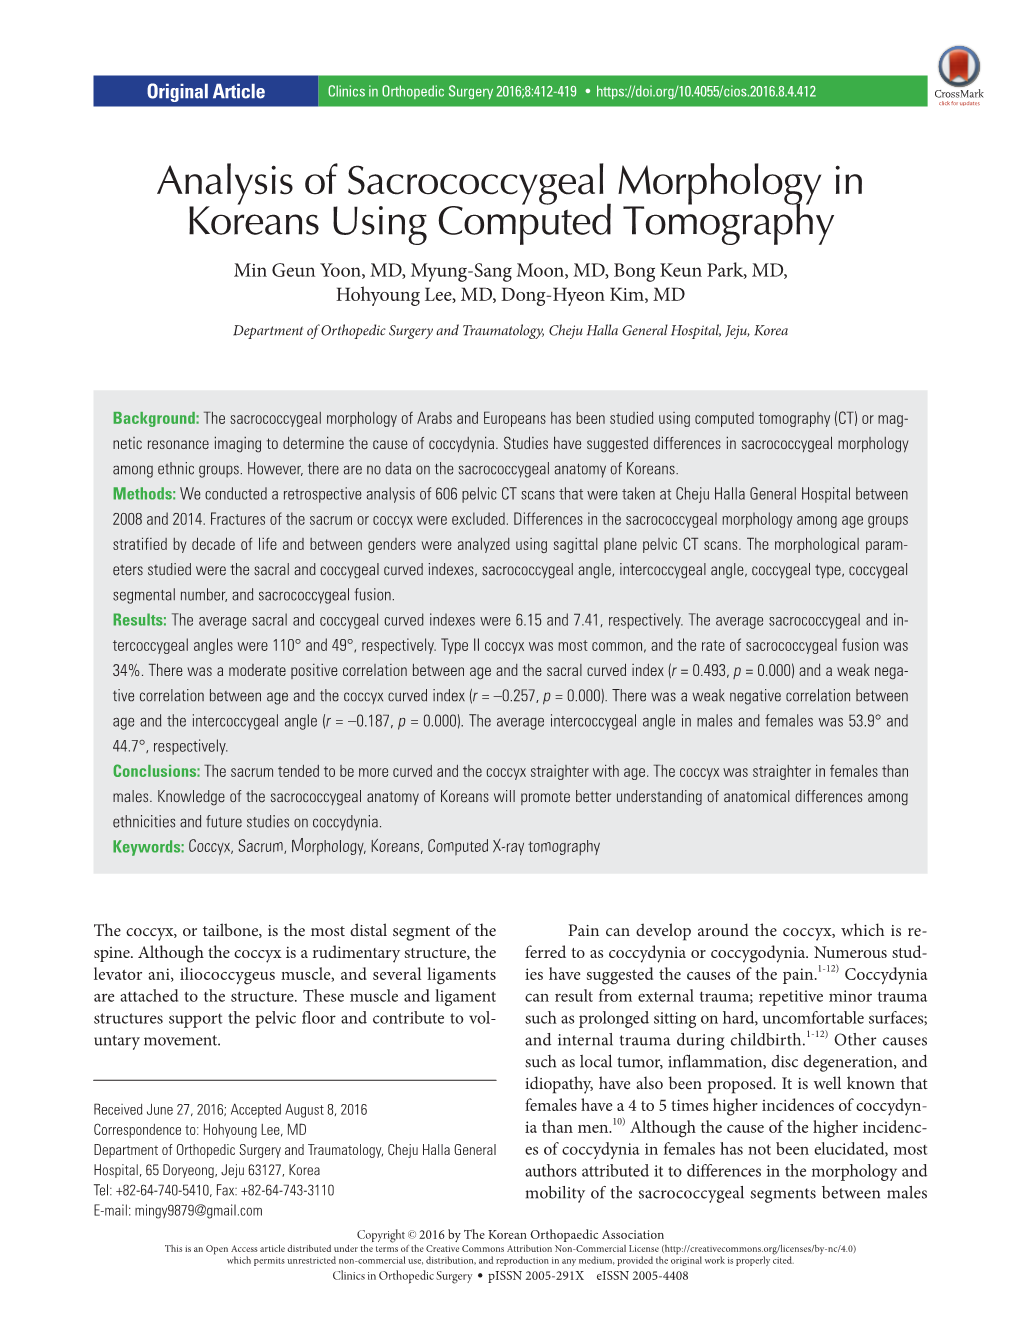 Analysis of Sacrococcygeal Morphology in Koreans Using